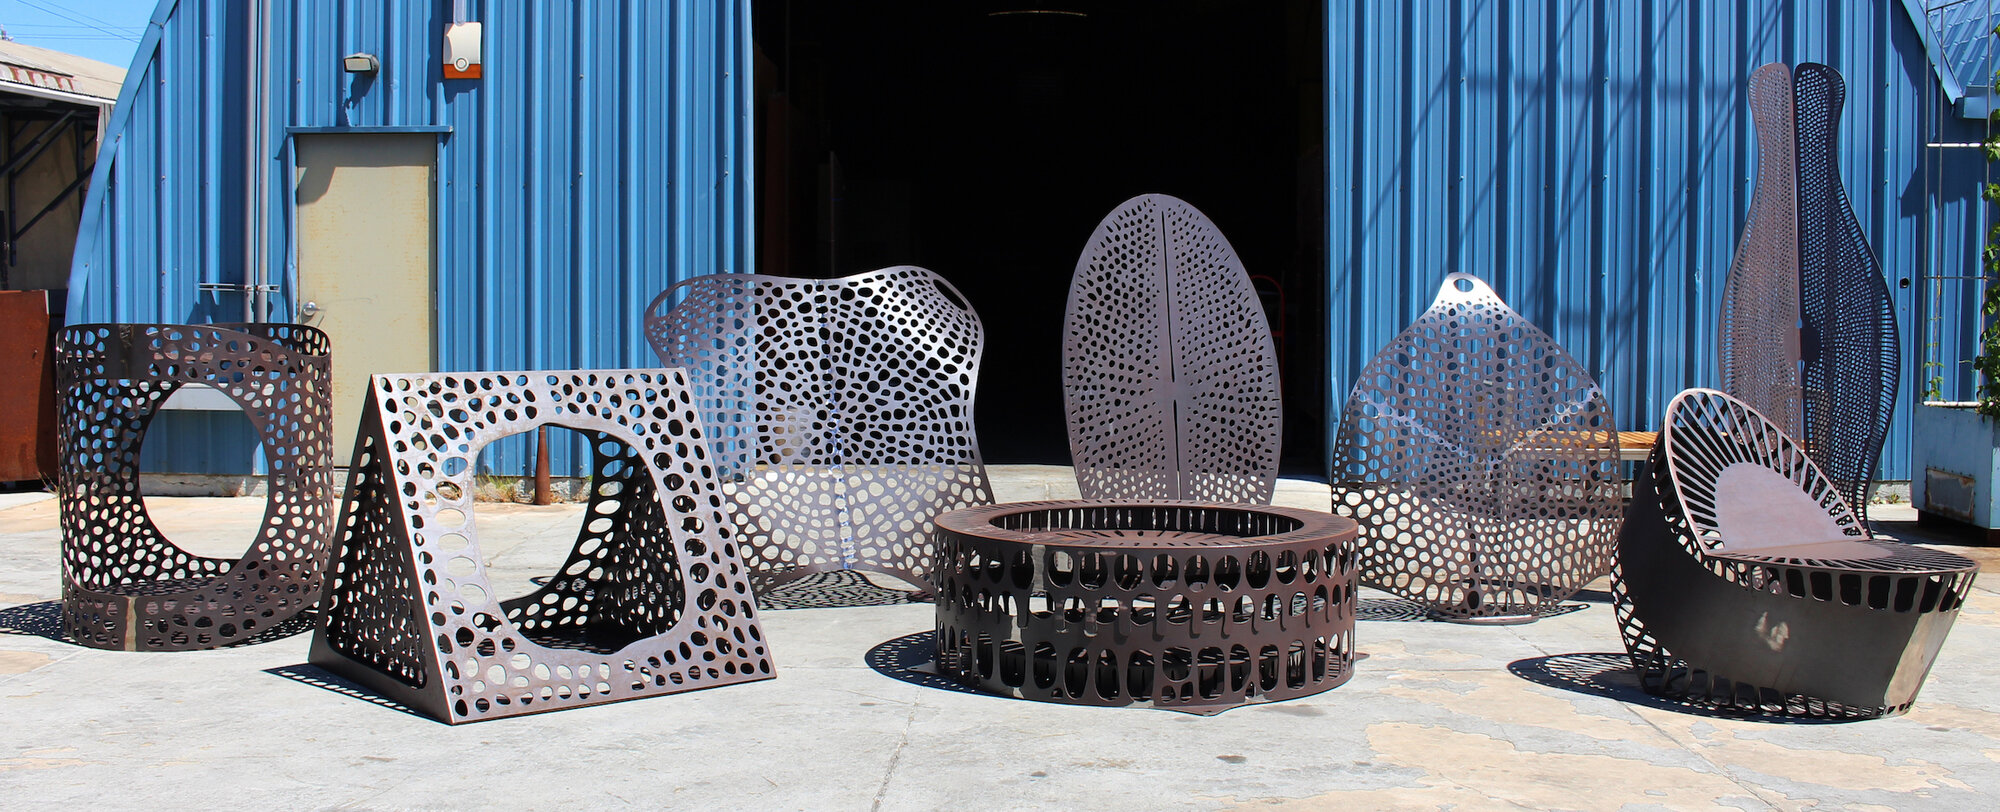 Diatom Sculpture Series (Public Art)